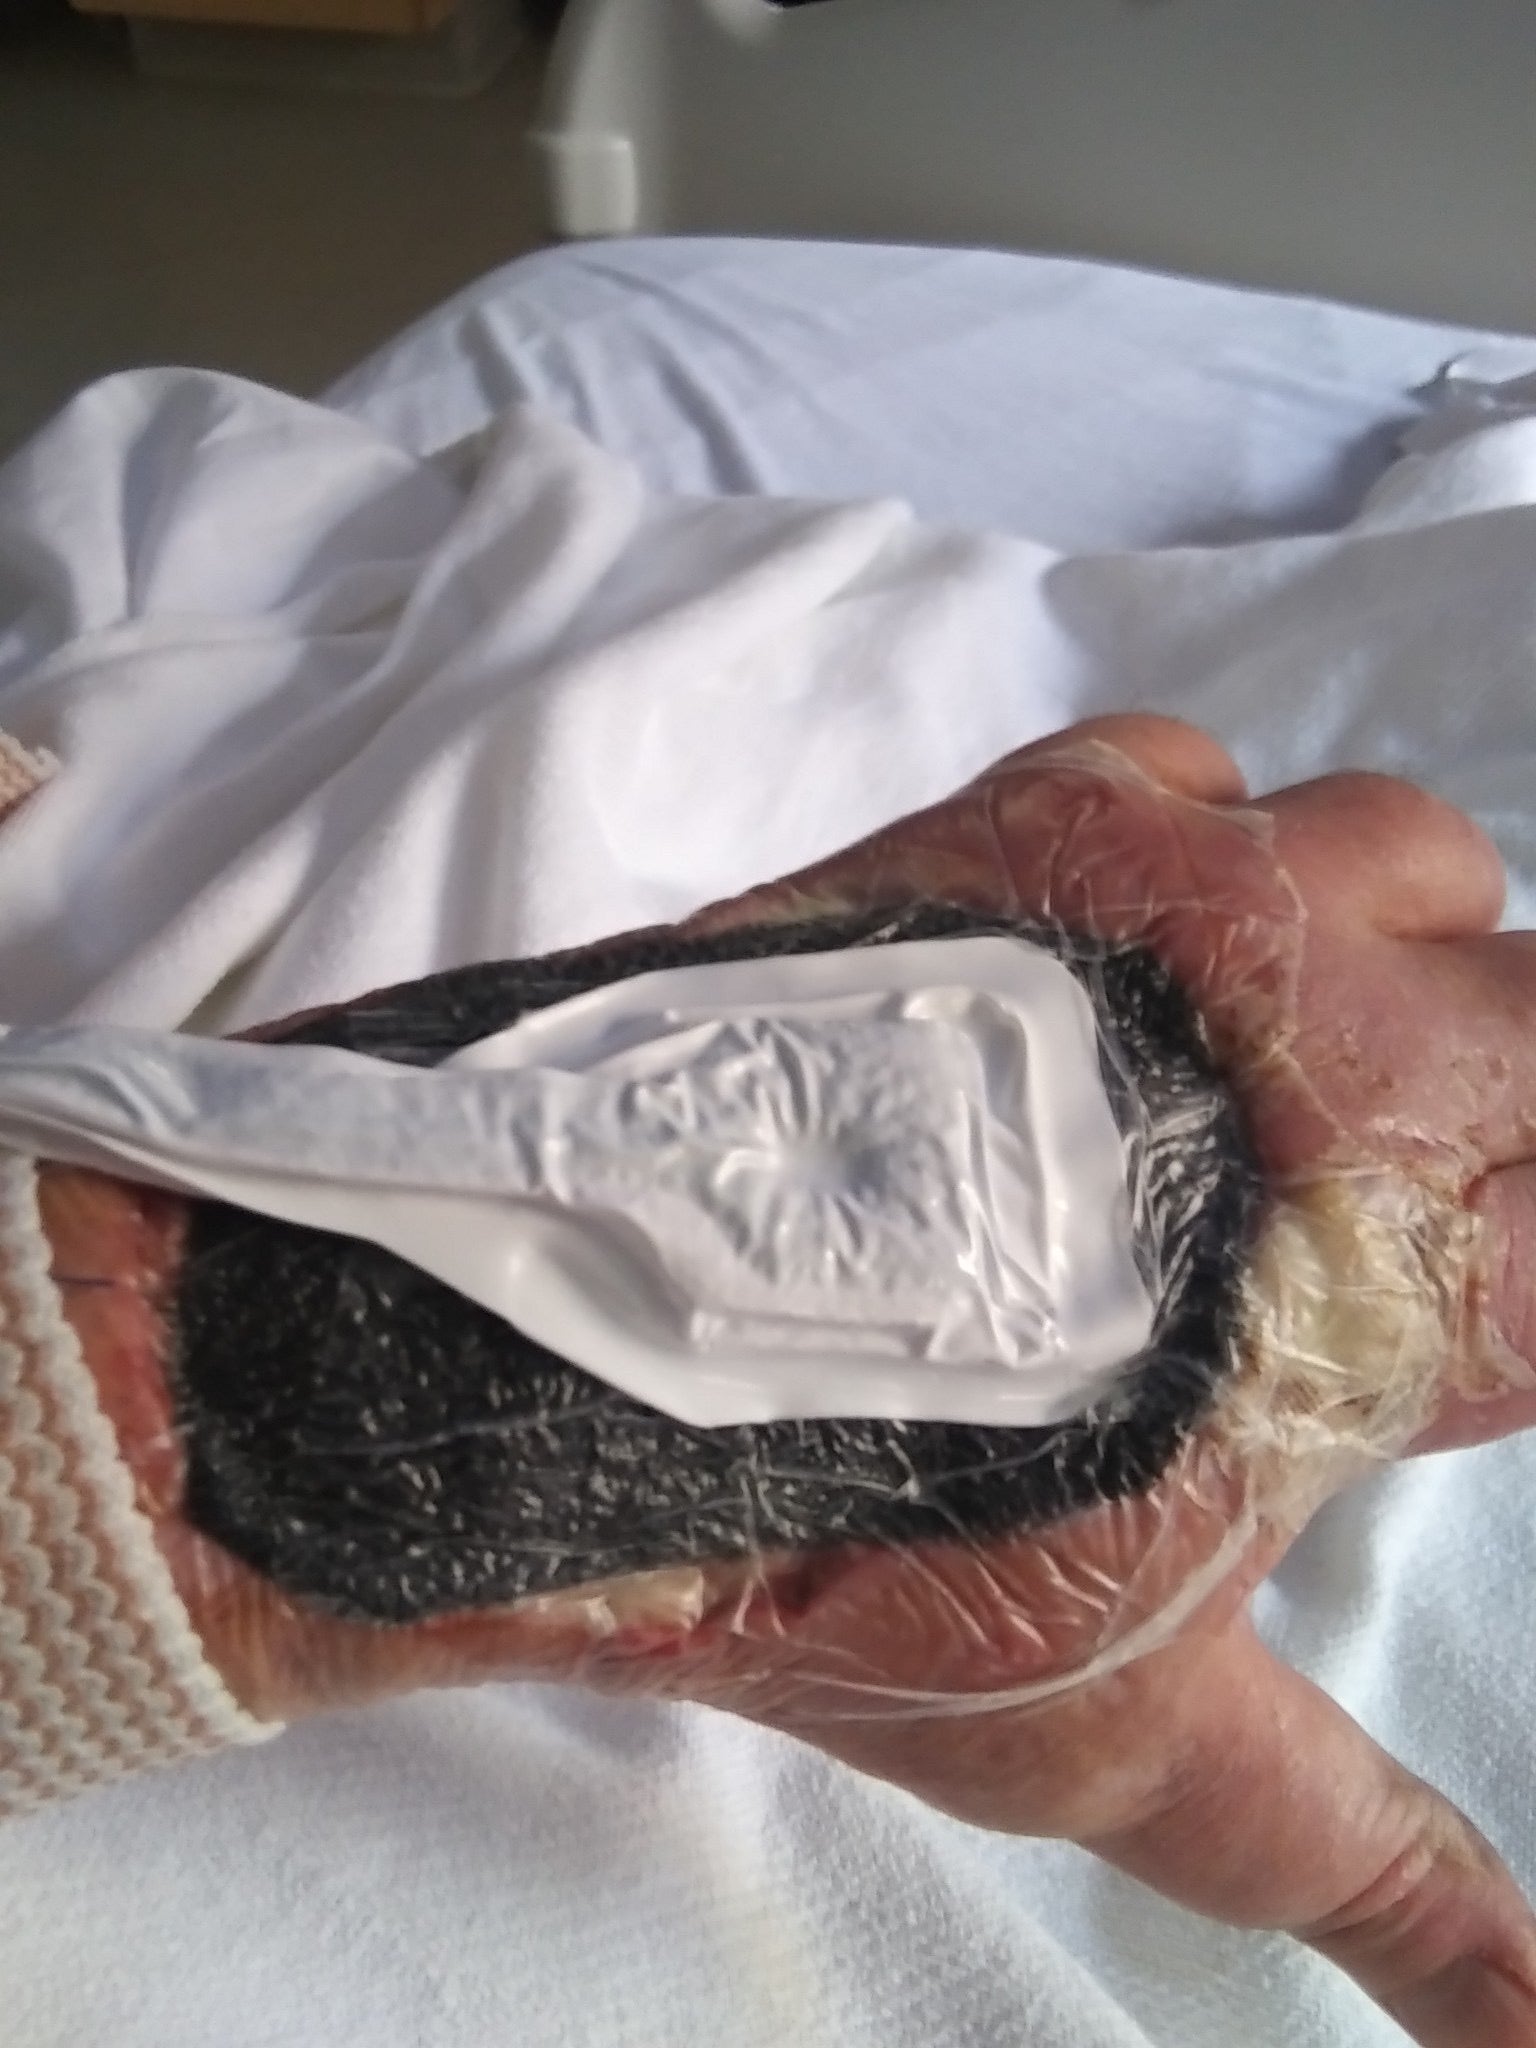 Xylazine wound on drug user's hand